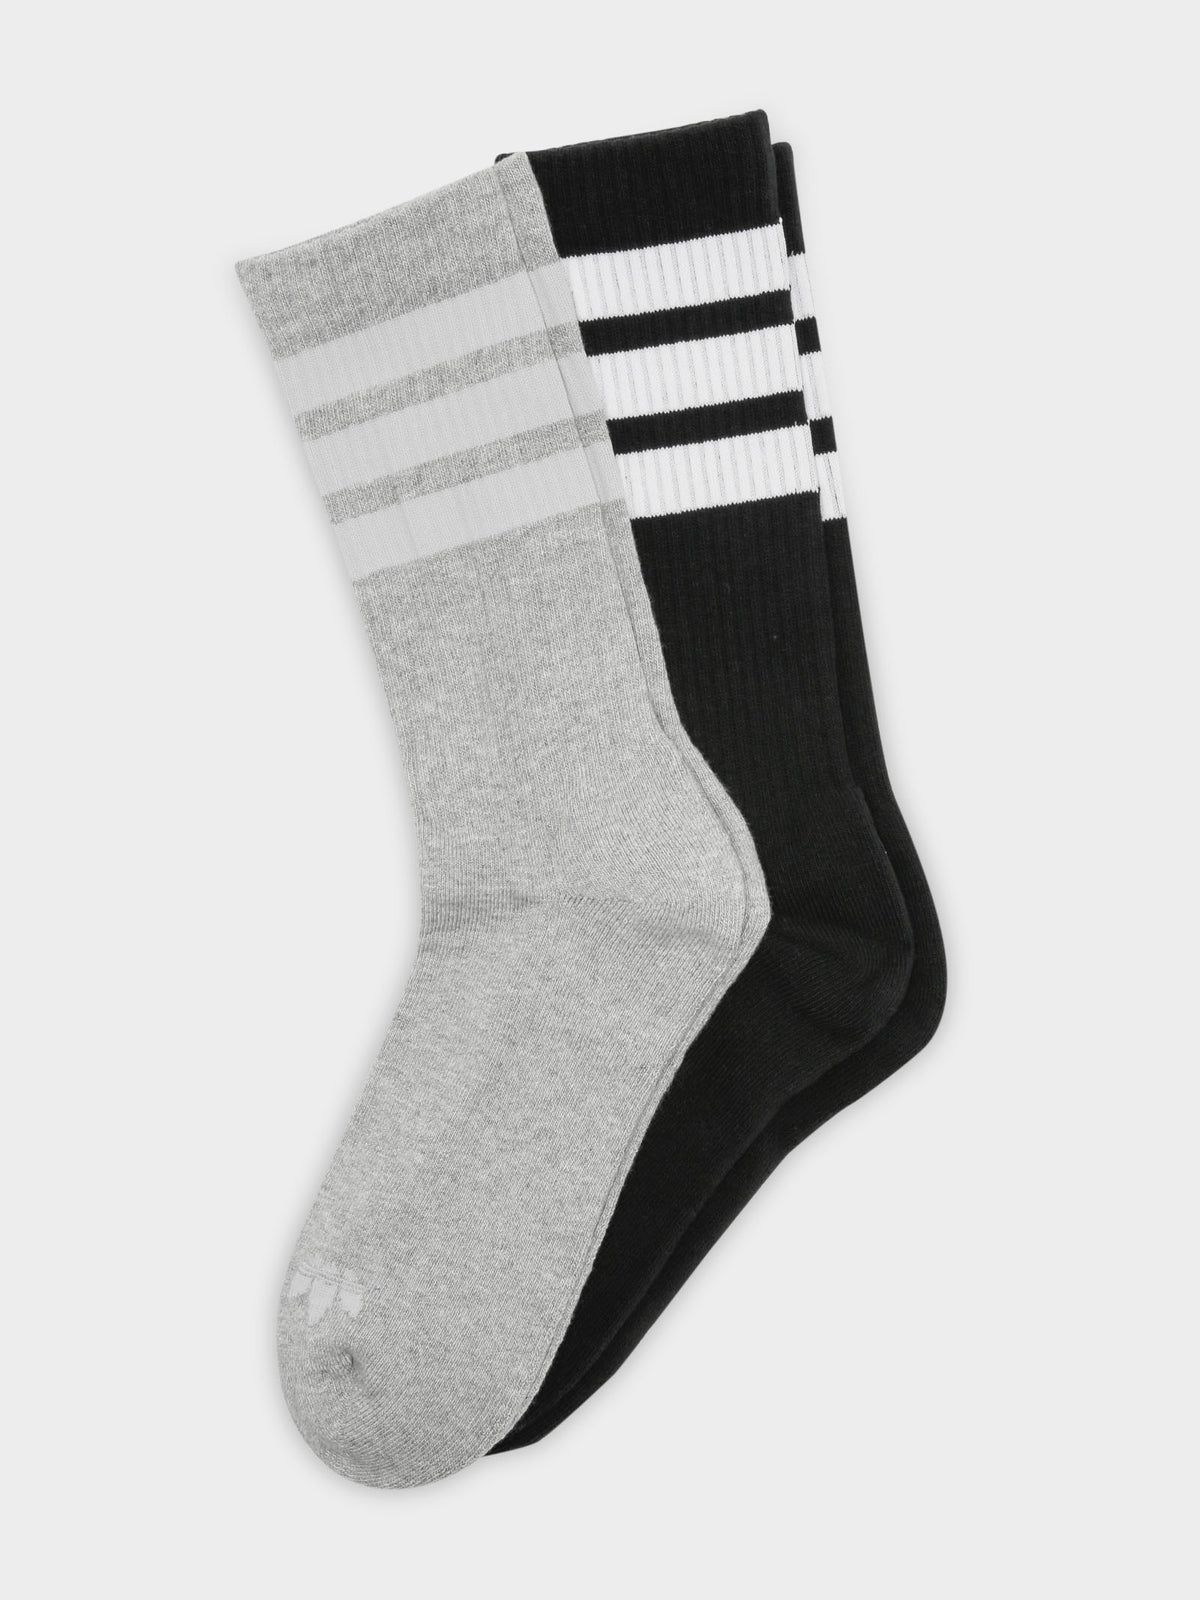 2 Pairs of Three Stripe Socks in Multi